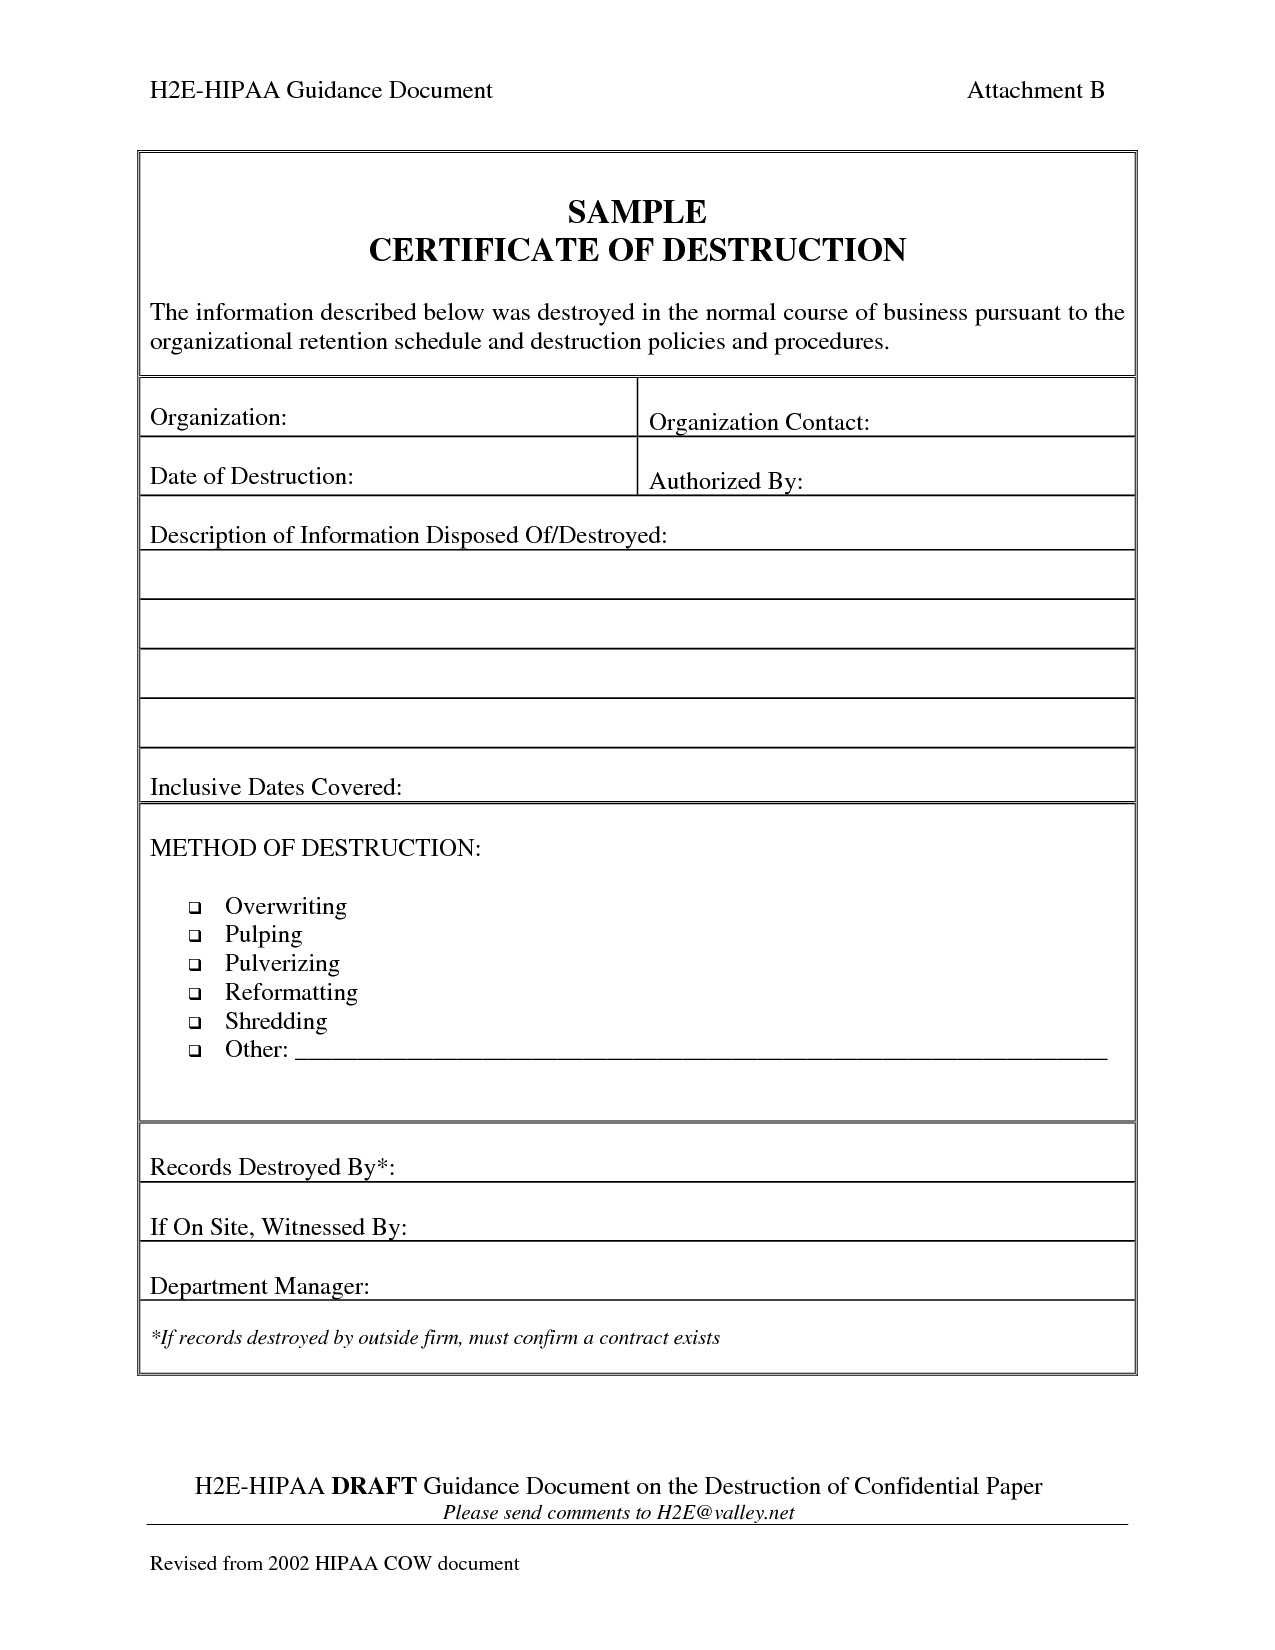 Certificate Of Destruction Template | Anti Grav For Hard Drive Destruction Certificate Template